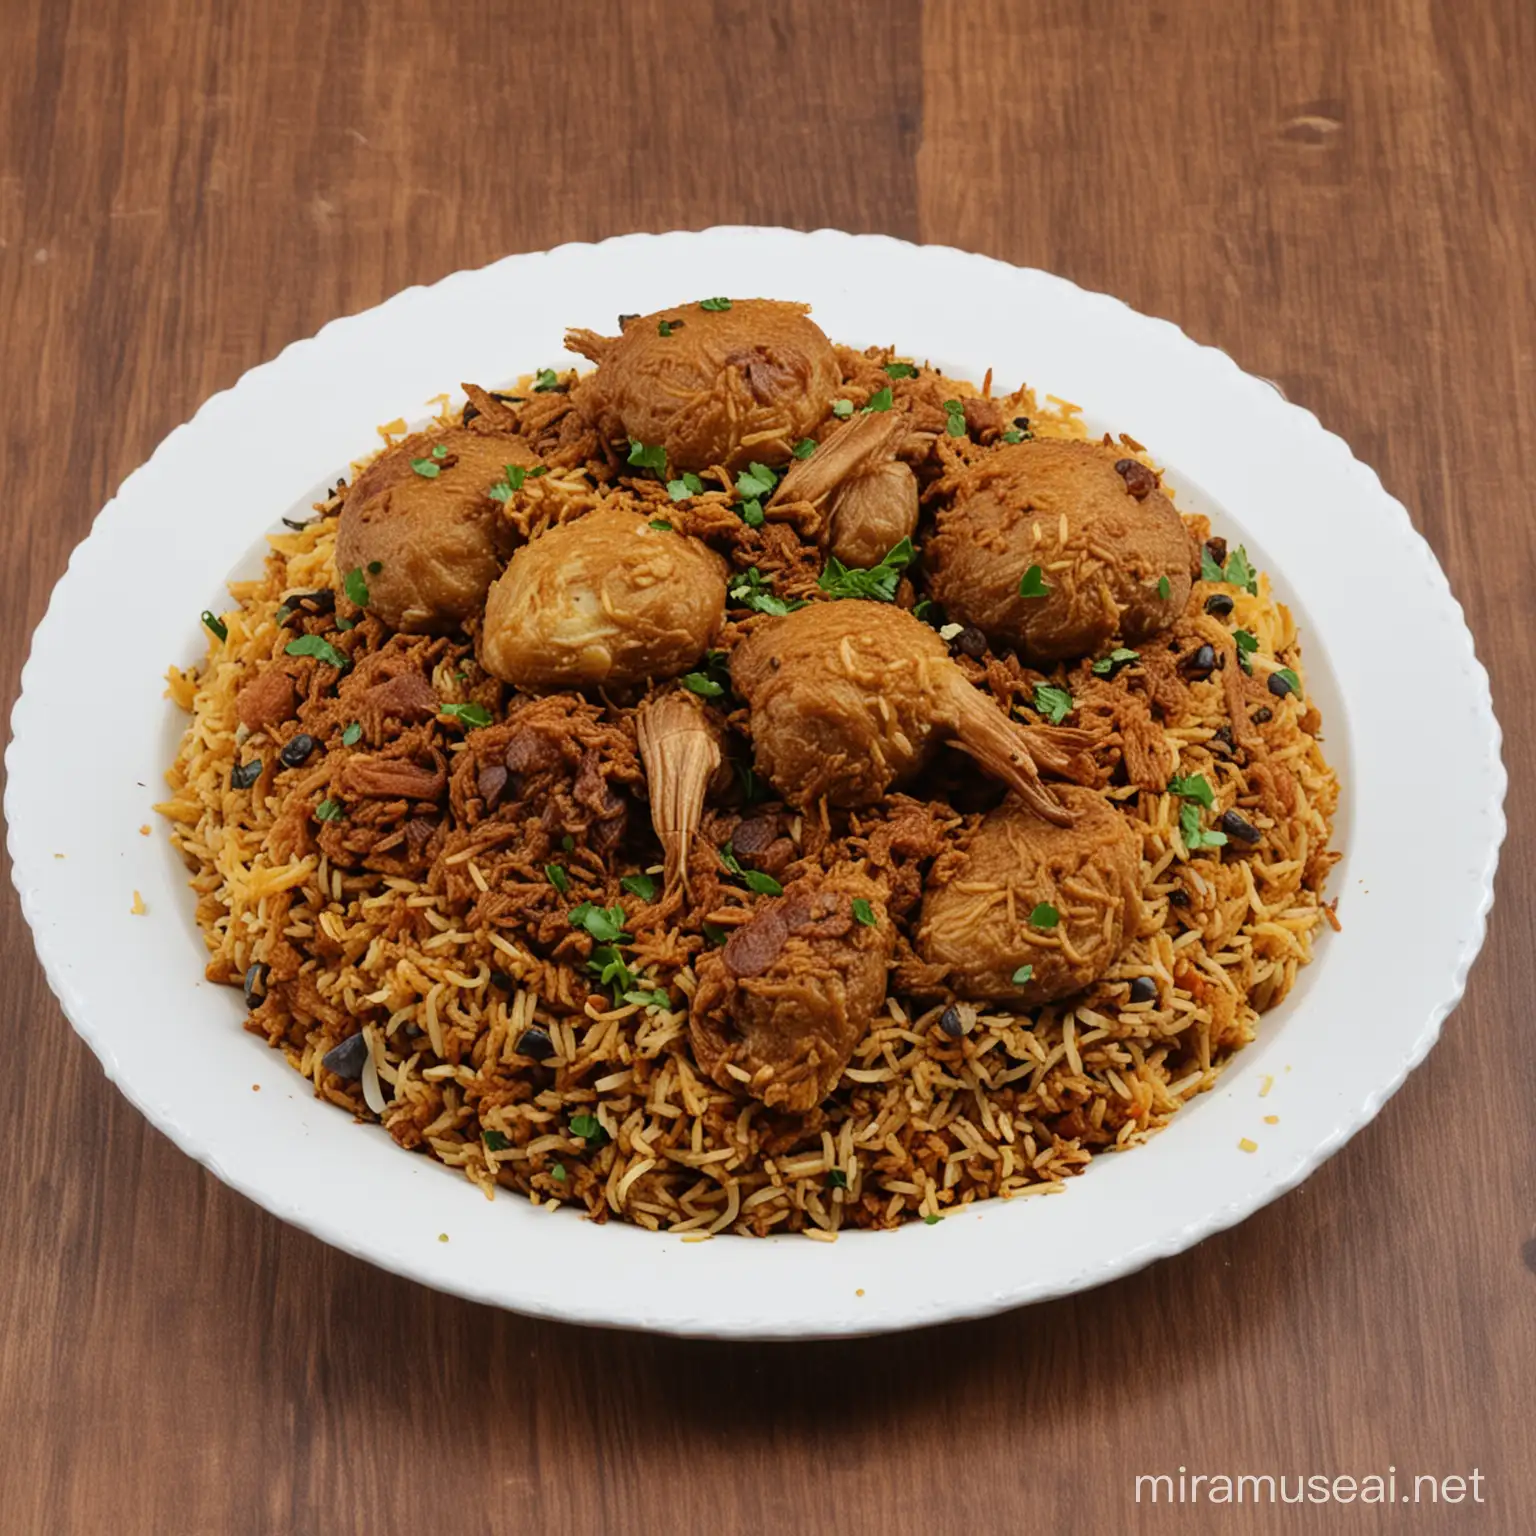 Goat Dum Biryani Savory Indian Rice Dish with Tender Goat Meat